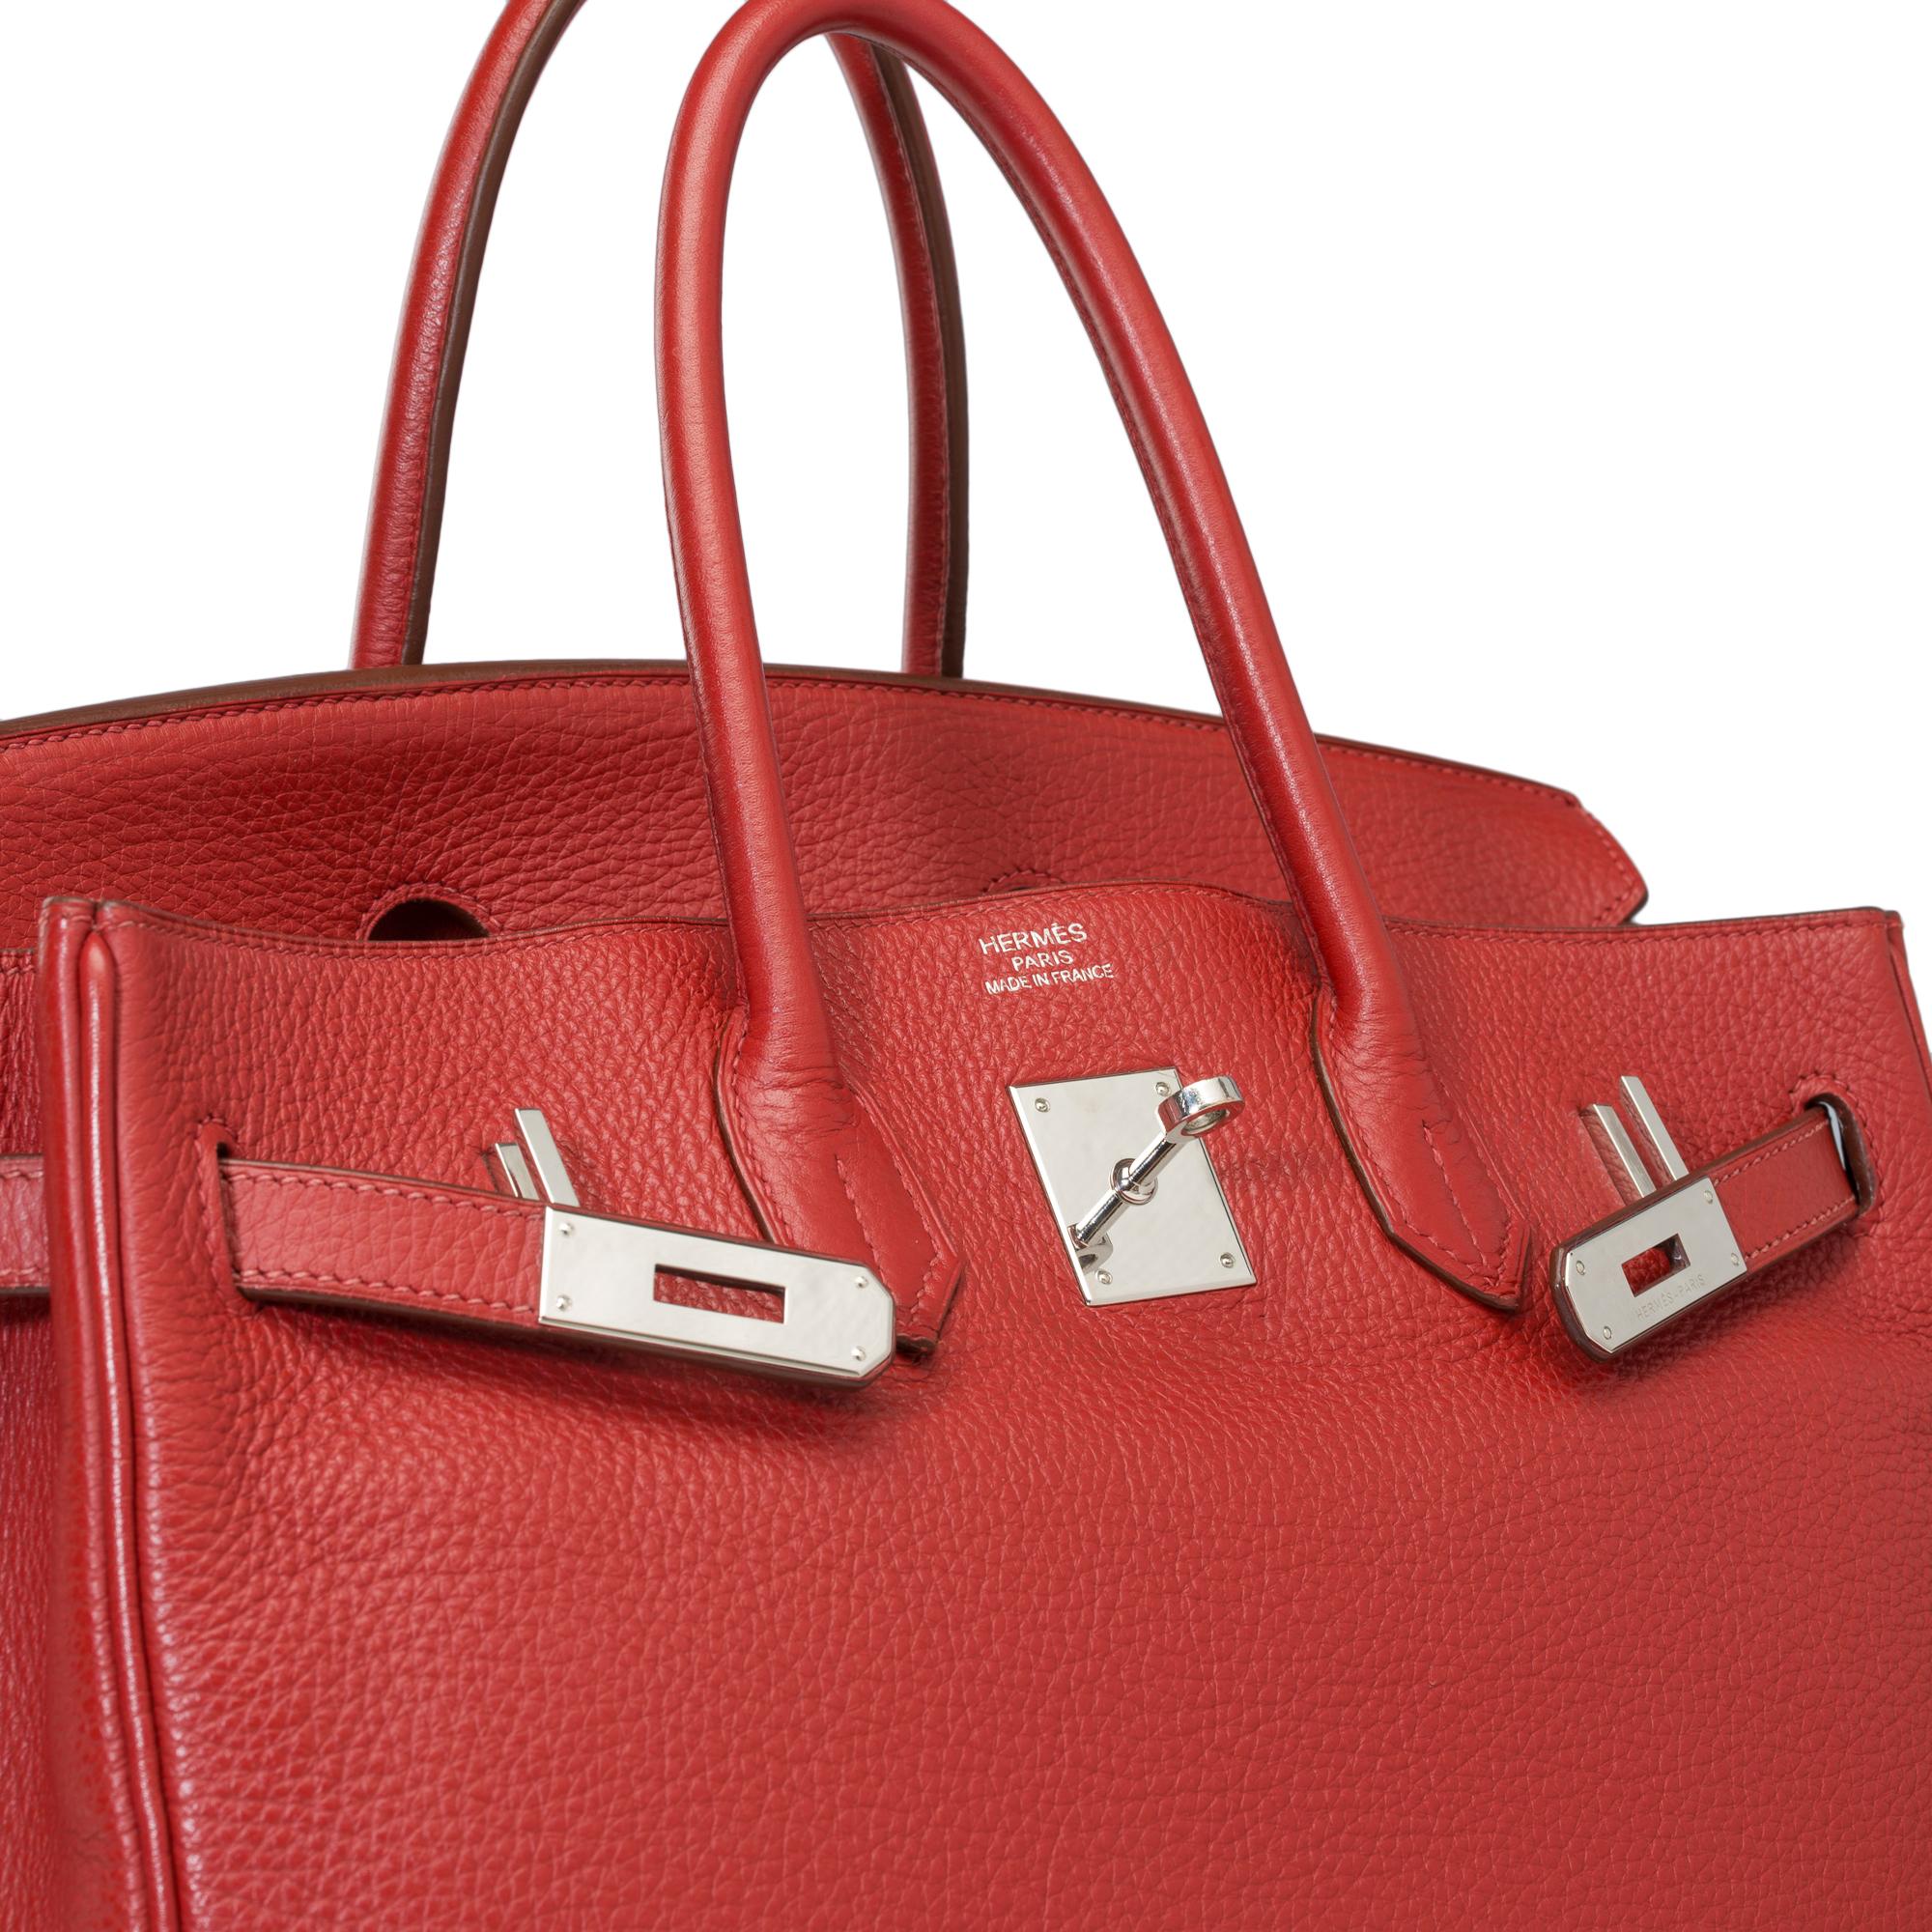 Stunning Hermès Birkin 35 handbag in Sienne Togo leather, SHW For Sale 4